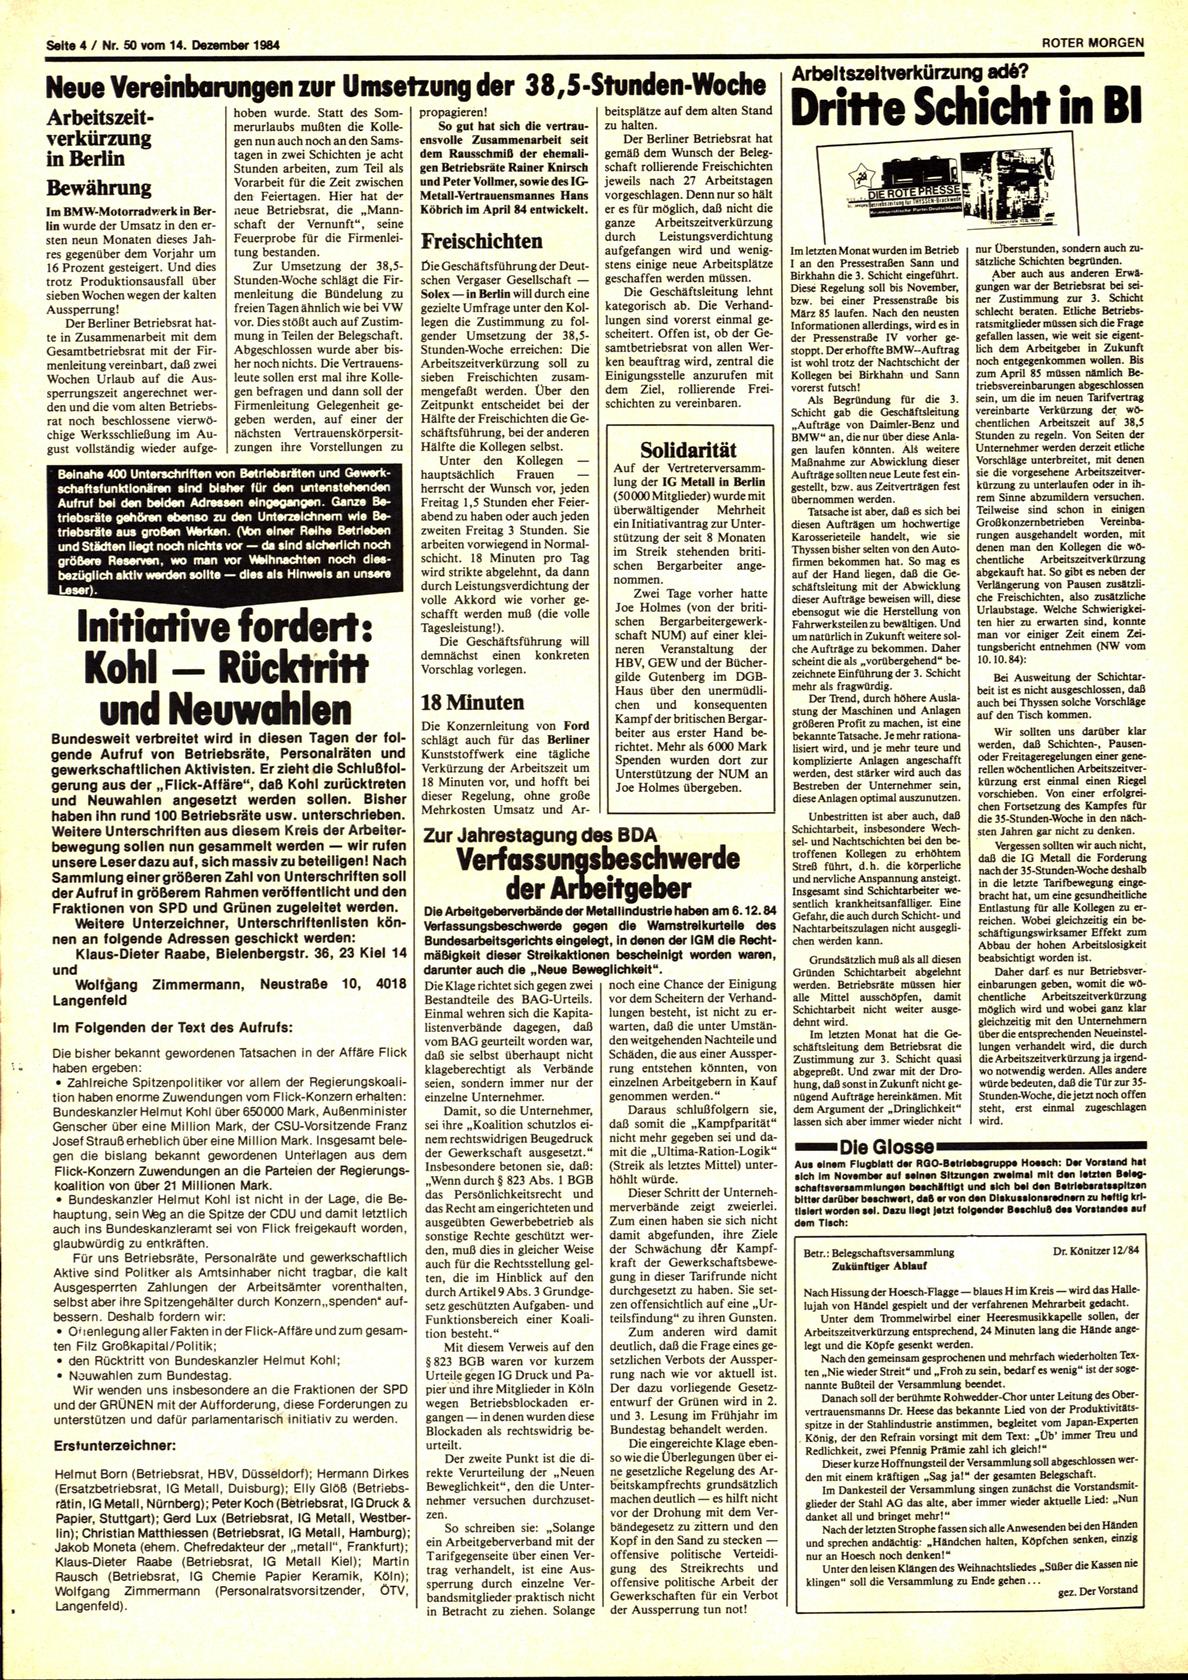 Roter Morgen, 18. Jg., 14. Dezember 1984, Nr. 50, Seite 4